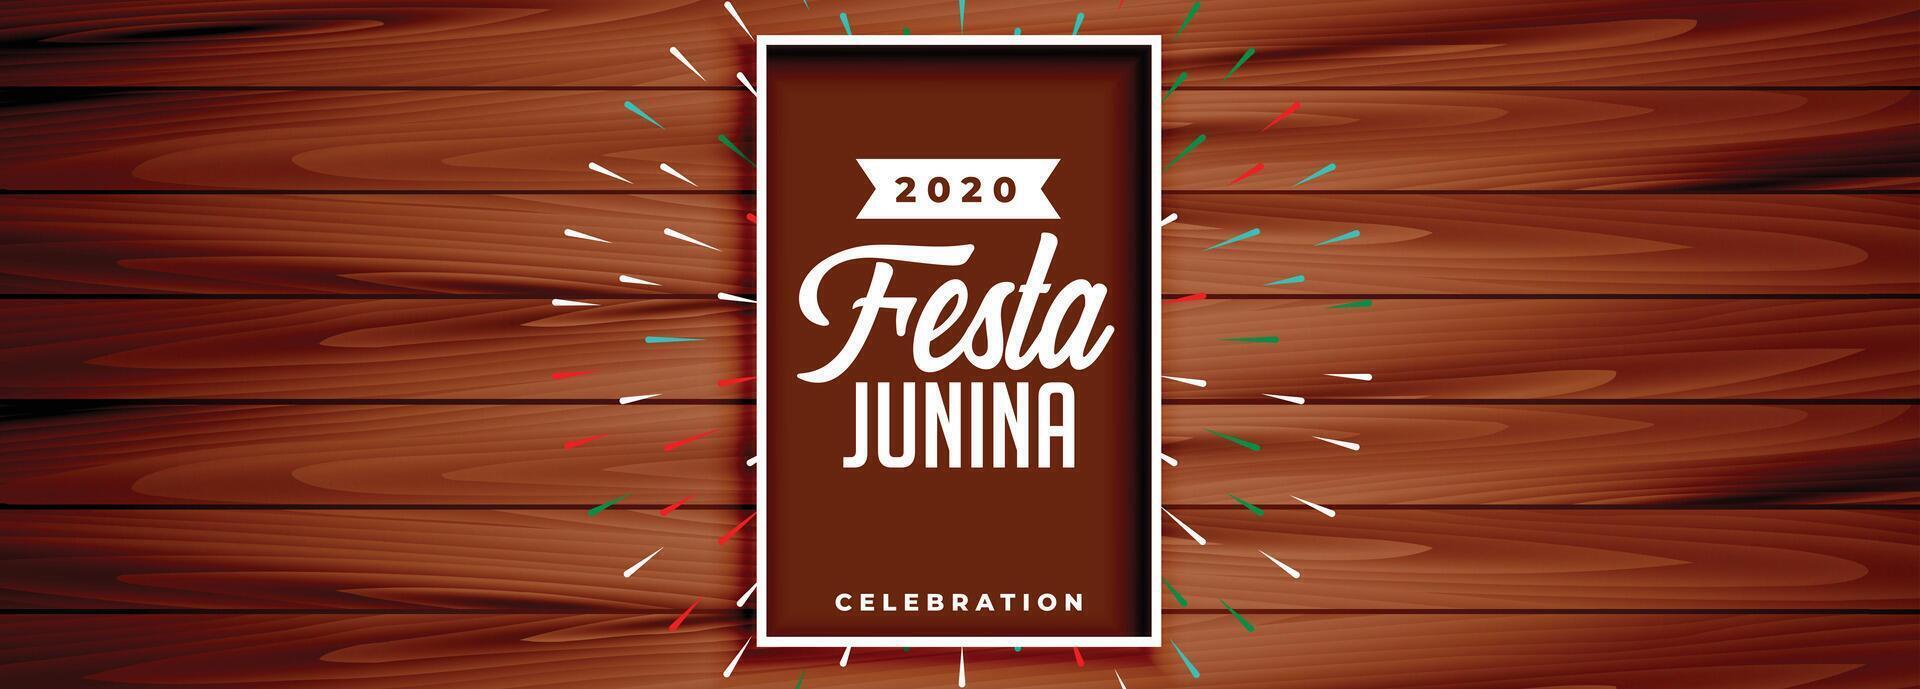 wooden style festa junina celebration banner design vector